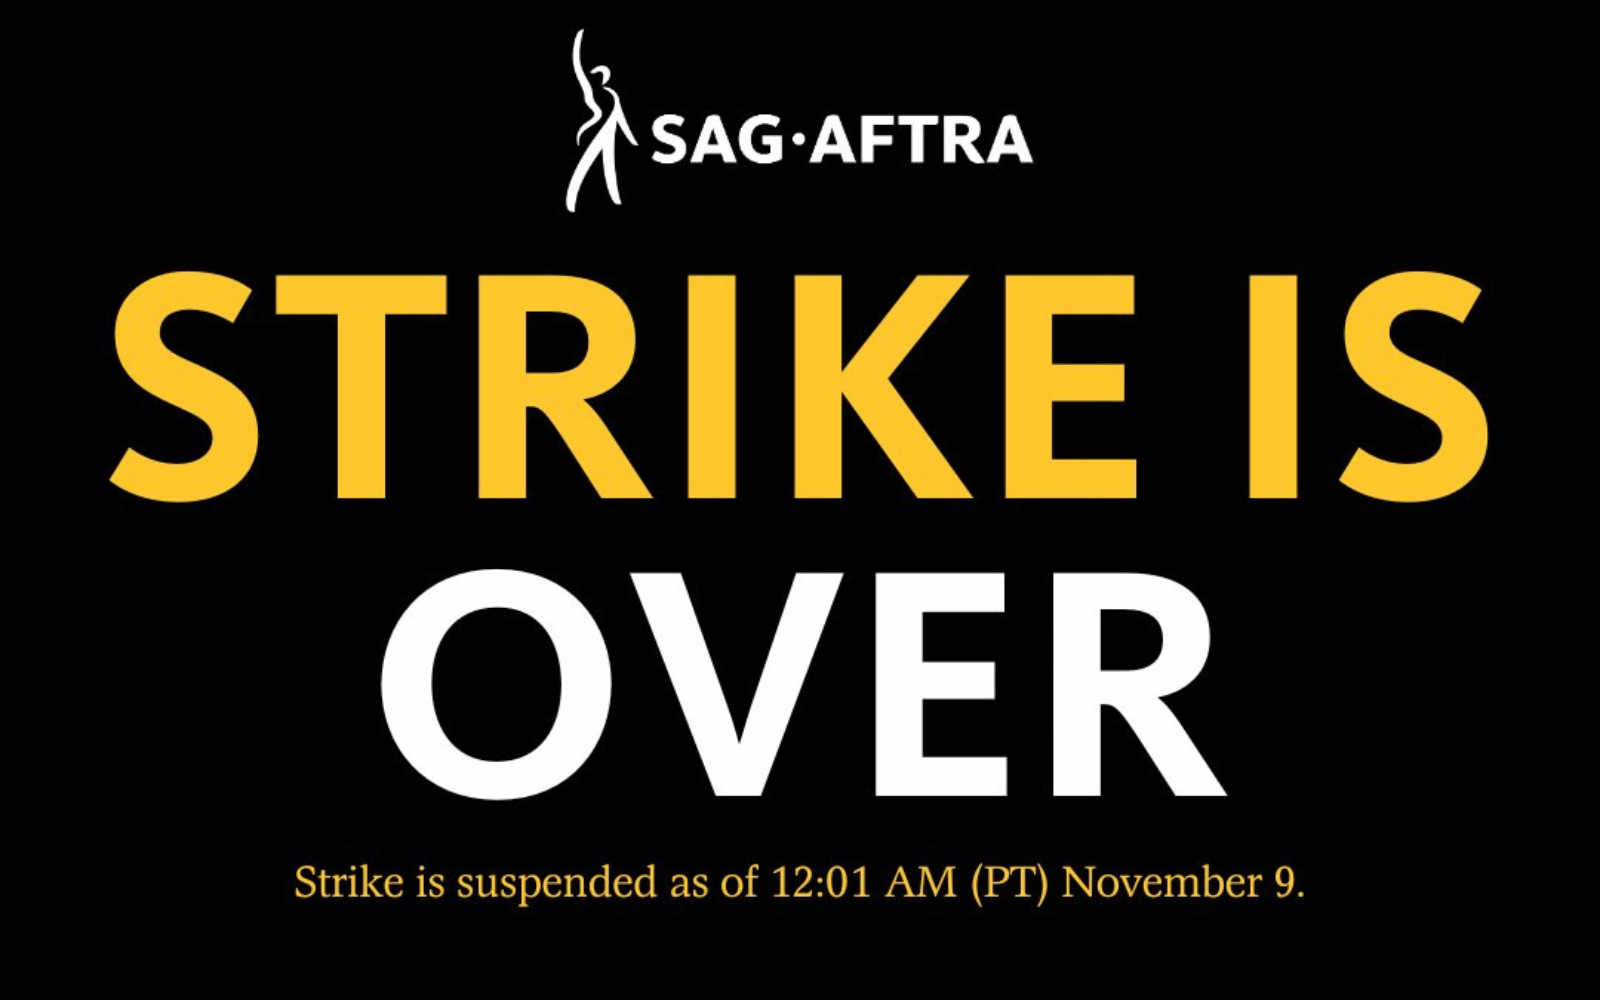 SAG-AFTRA strike is over text